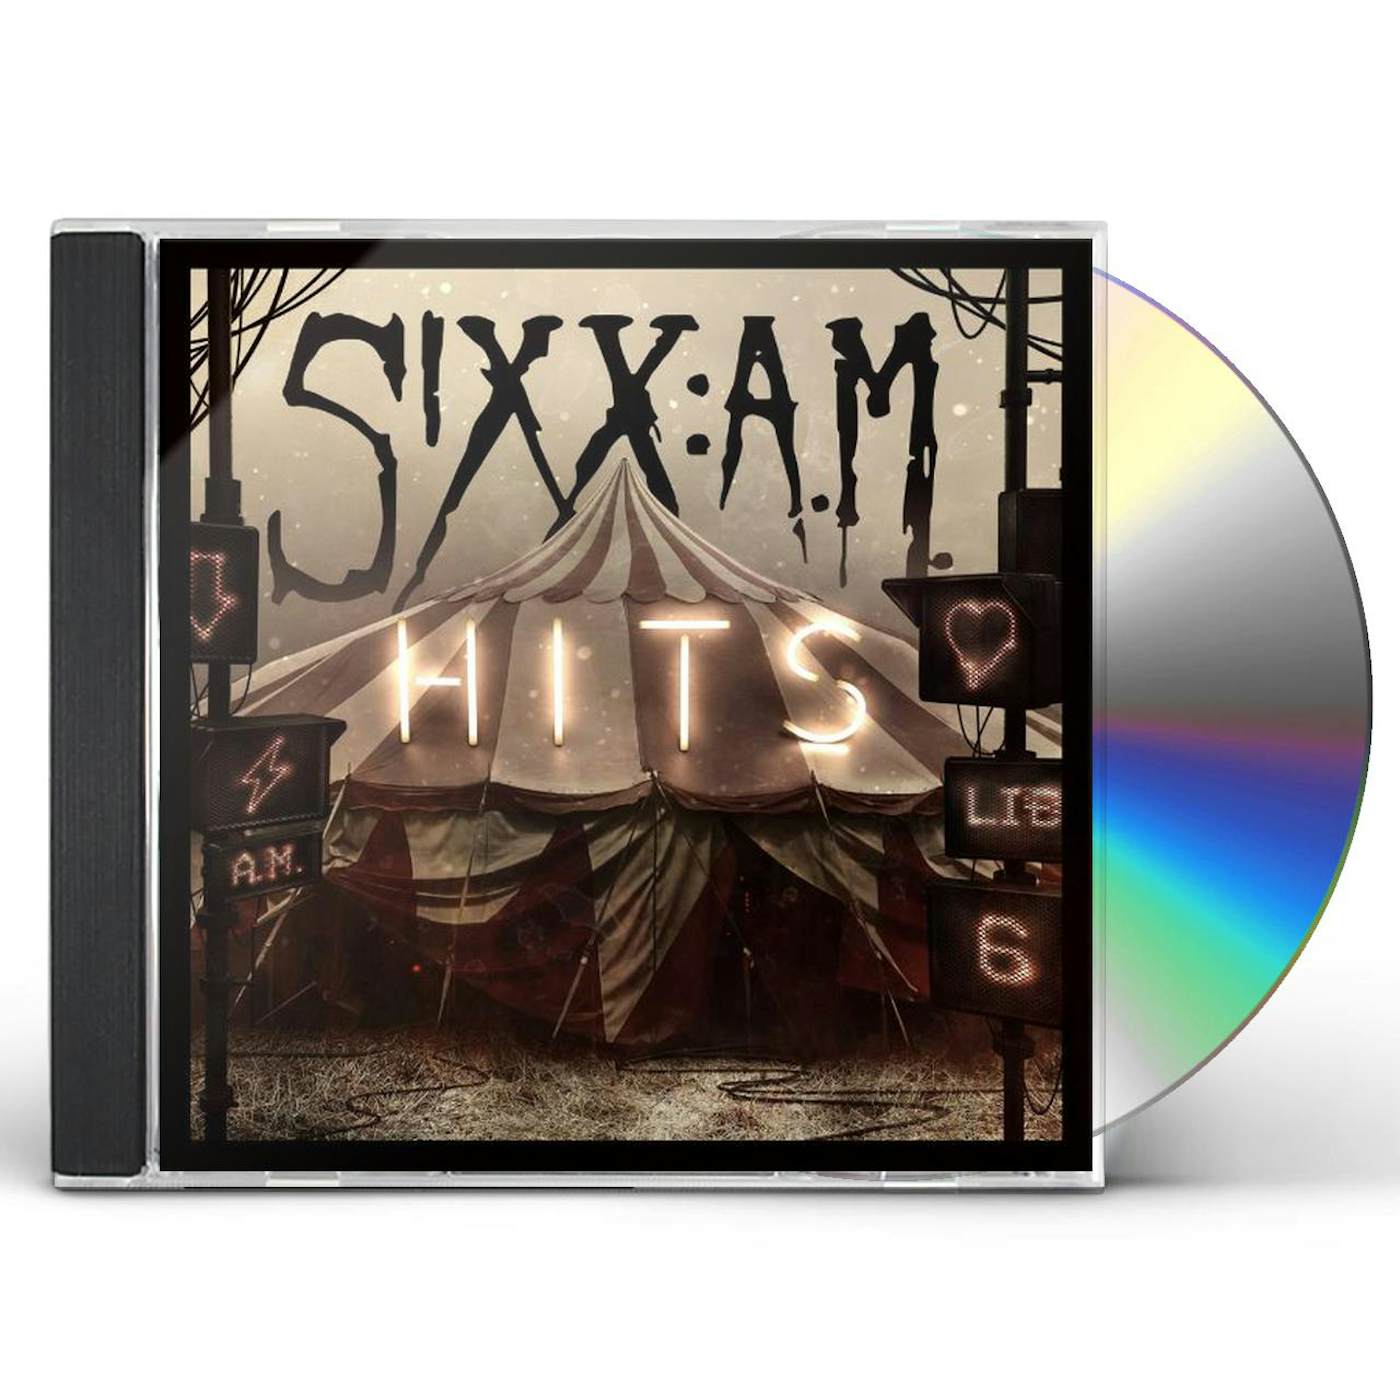 Sixx:A.M. HITS CD